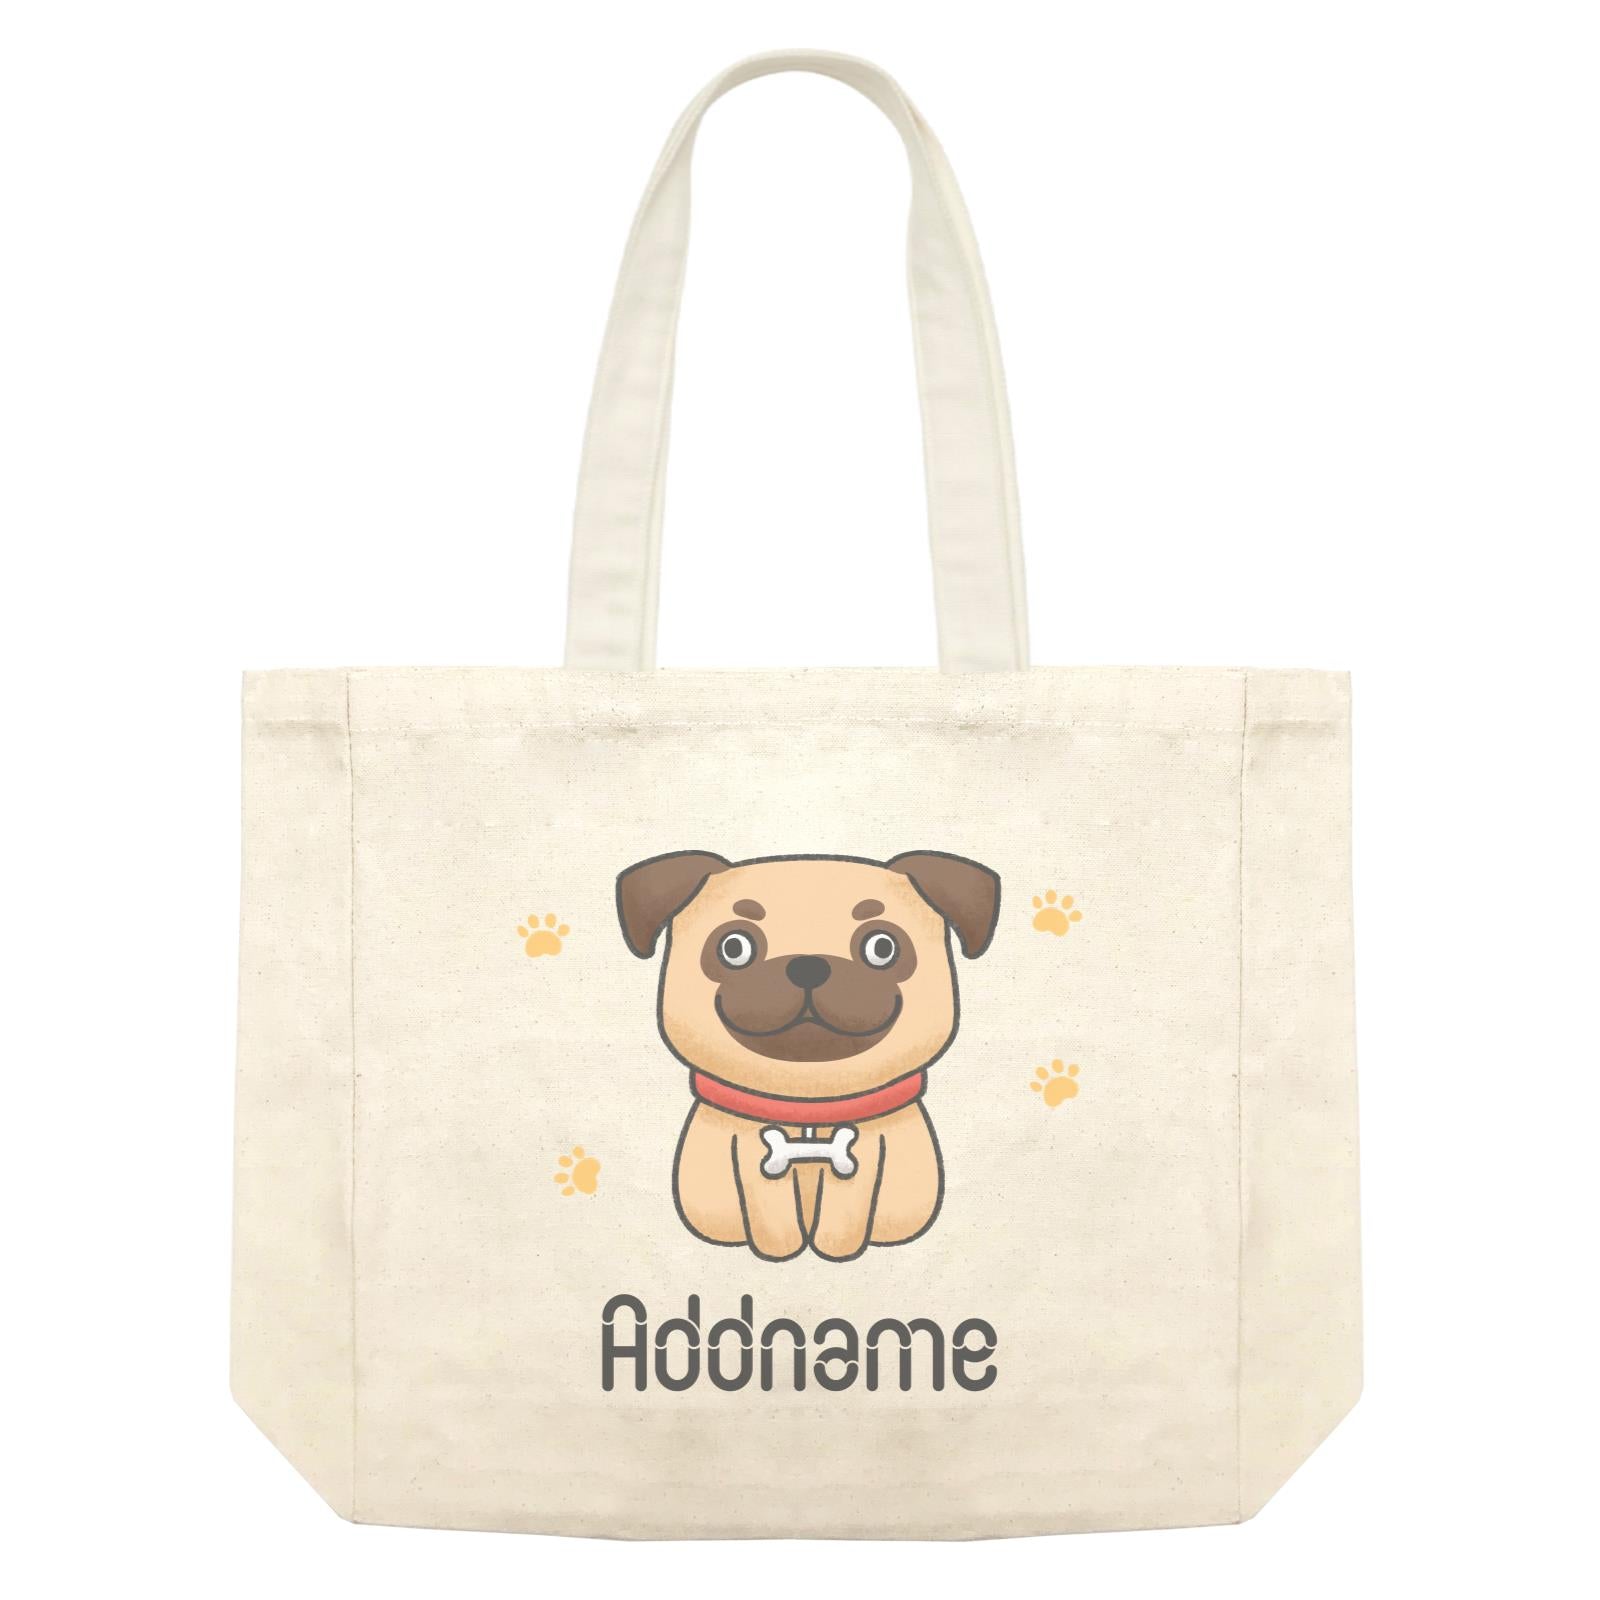 Cute Hand Drawn Style Pug Addname Shopping Bag